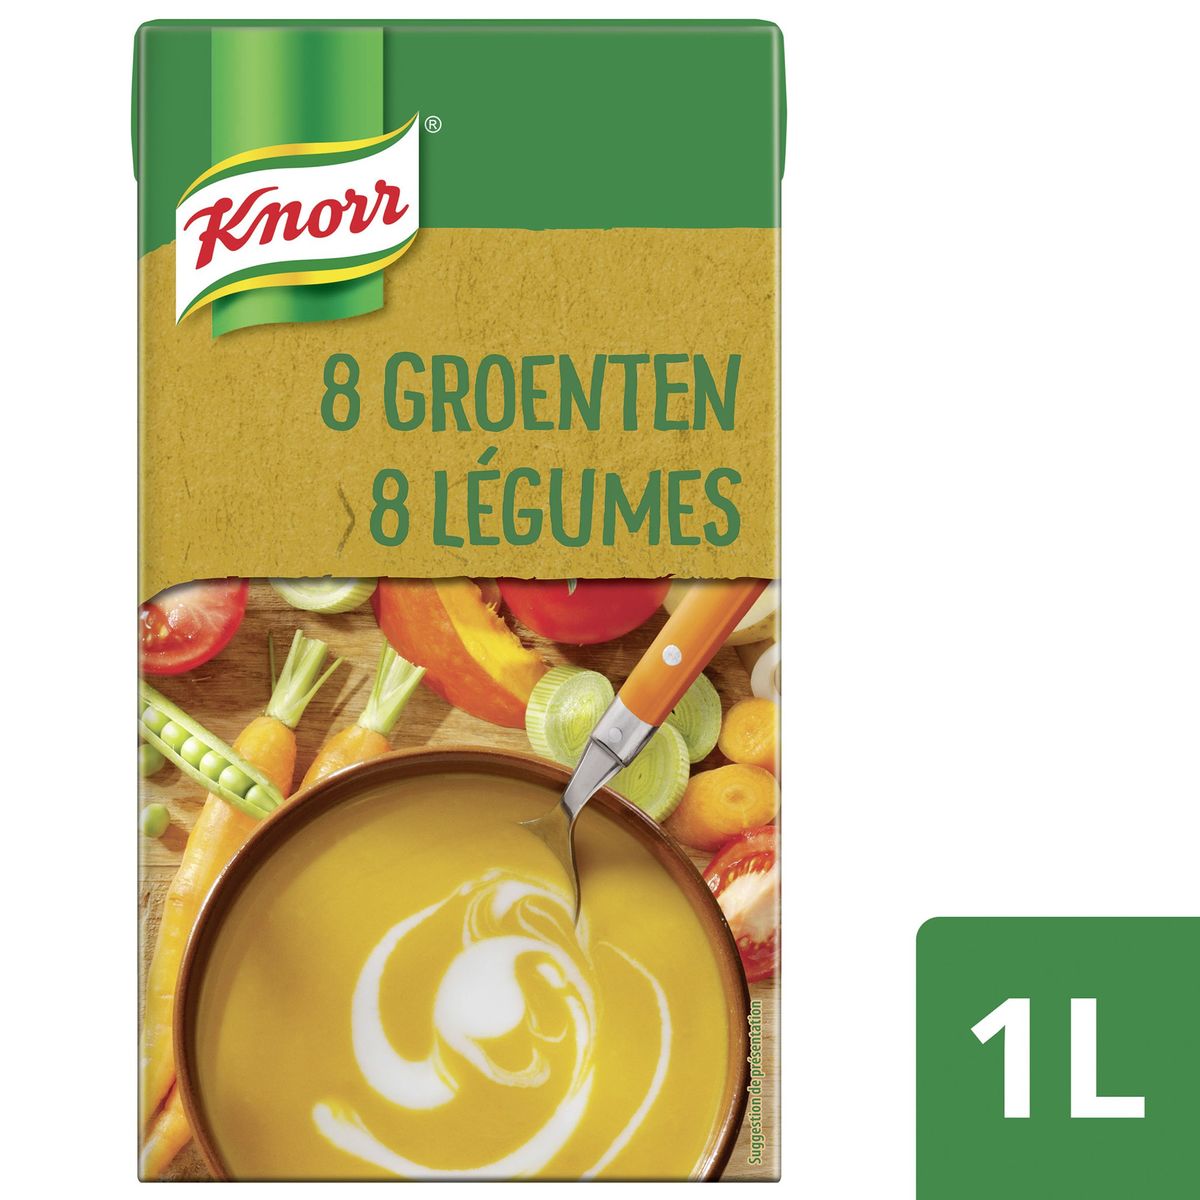 Knorr Classics Tetra Soep 8 Groentenweelde 1 L